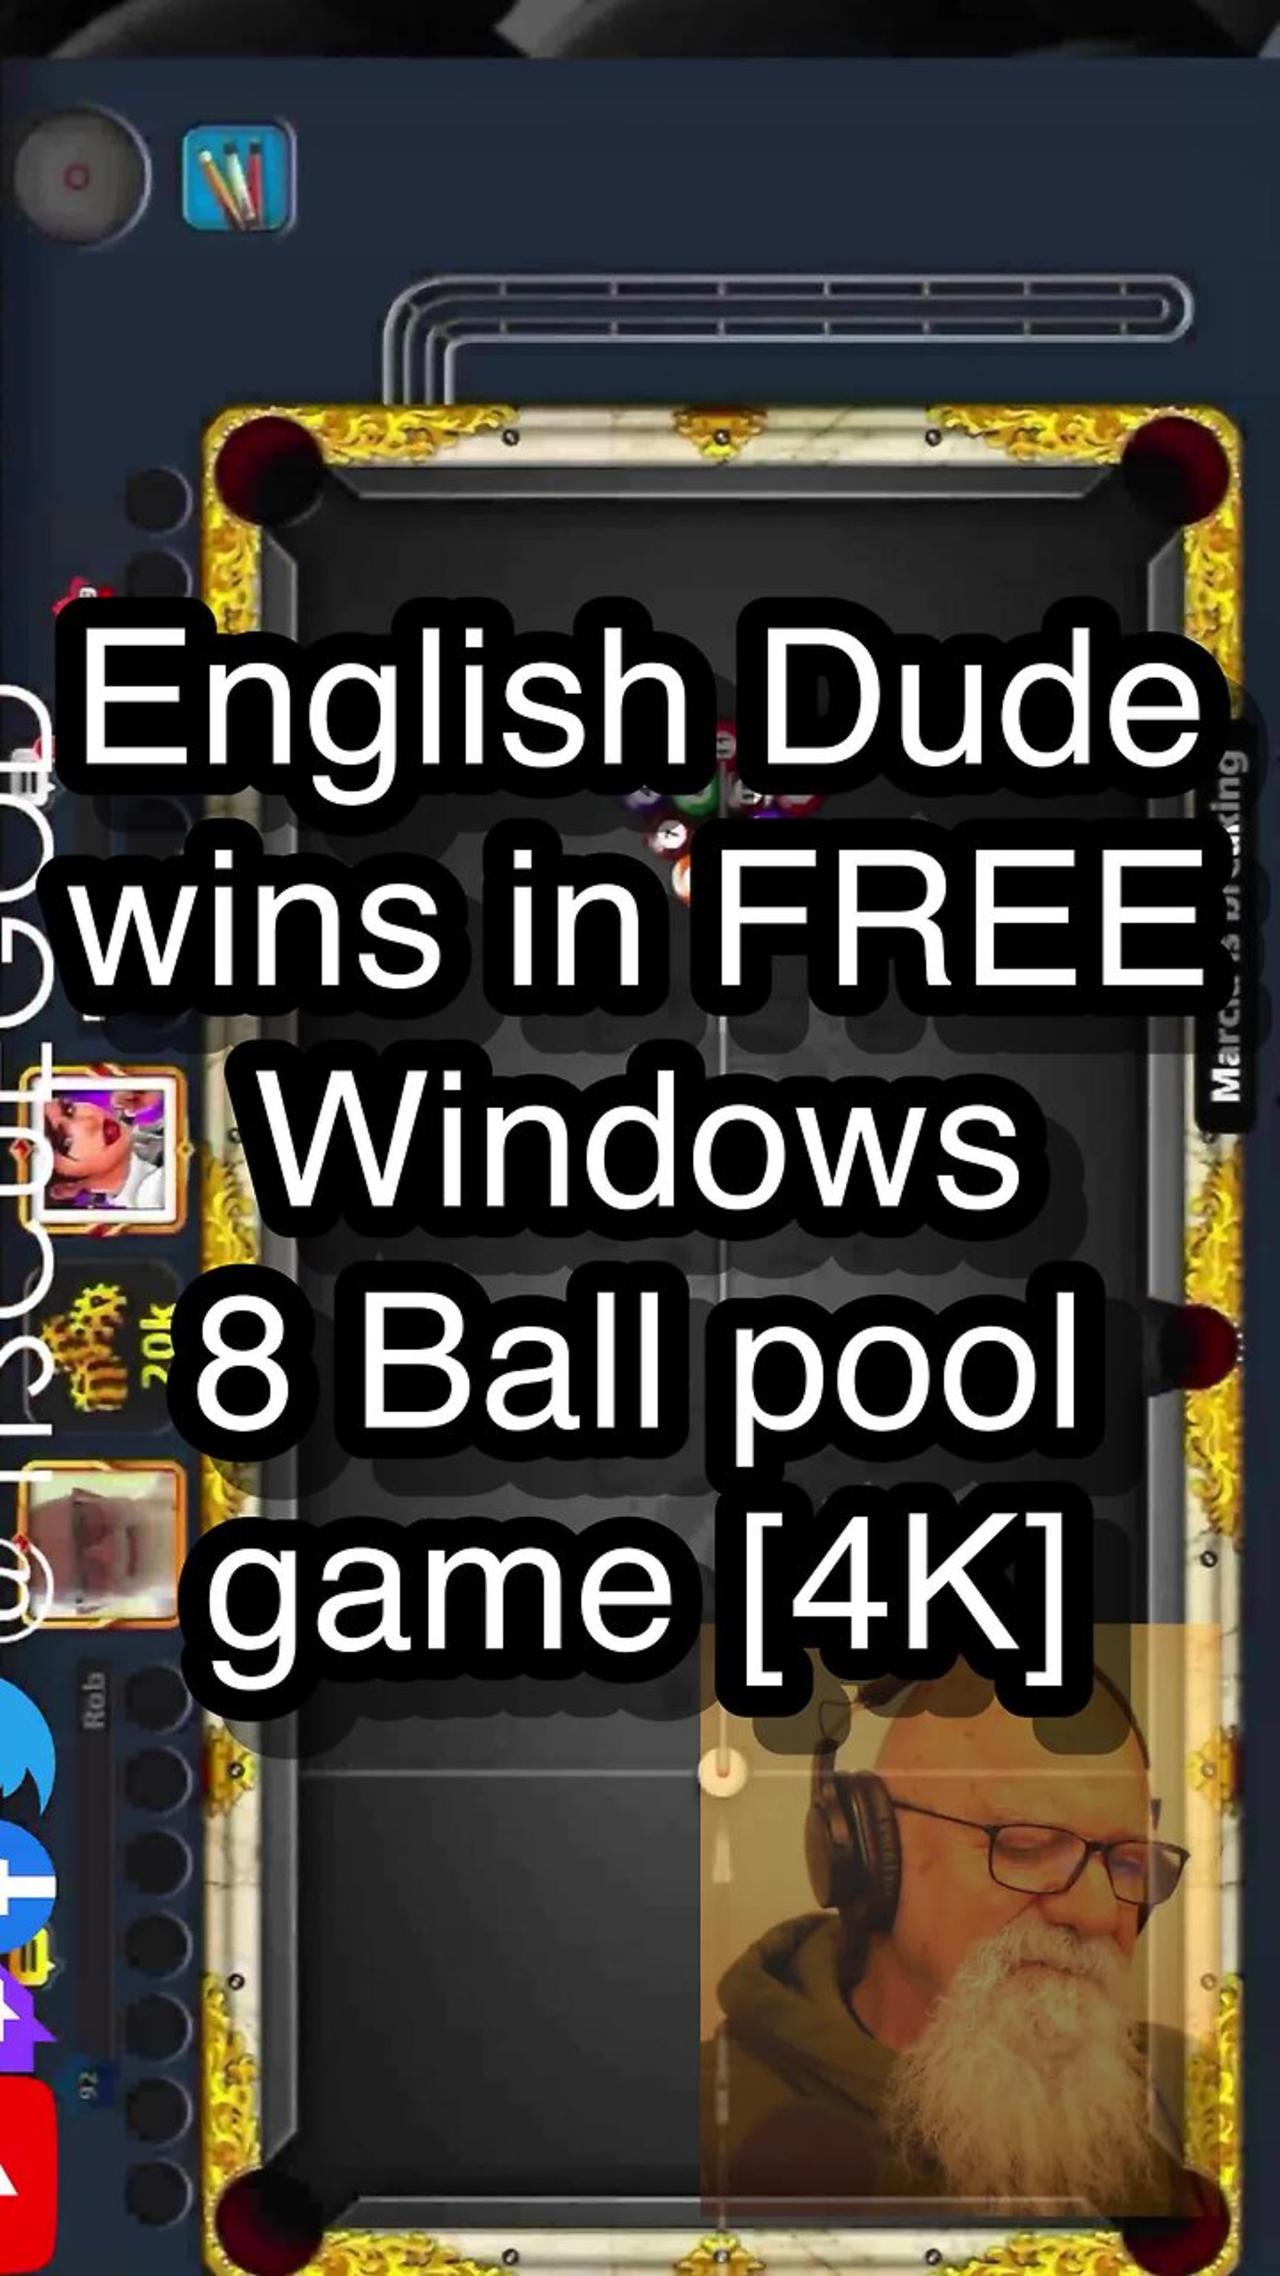 Happy Thanksgiving 🦃🦃🦃 English Dude wins in FREE Windows 8 Ball pool game [4K] 🎱🎱🎱 8 Ball Pool 🎱🎱🎱